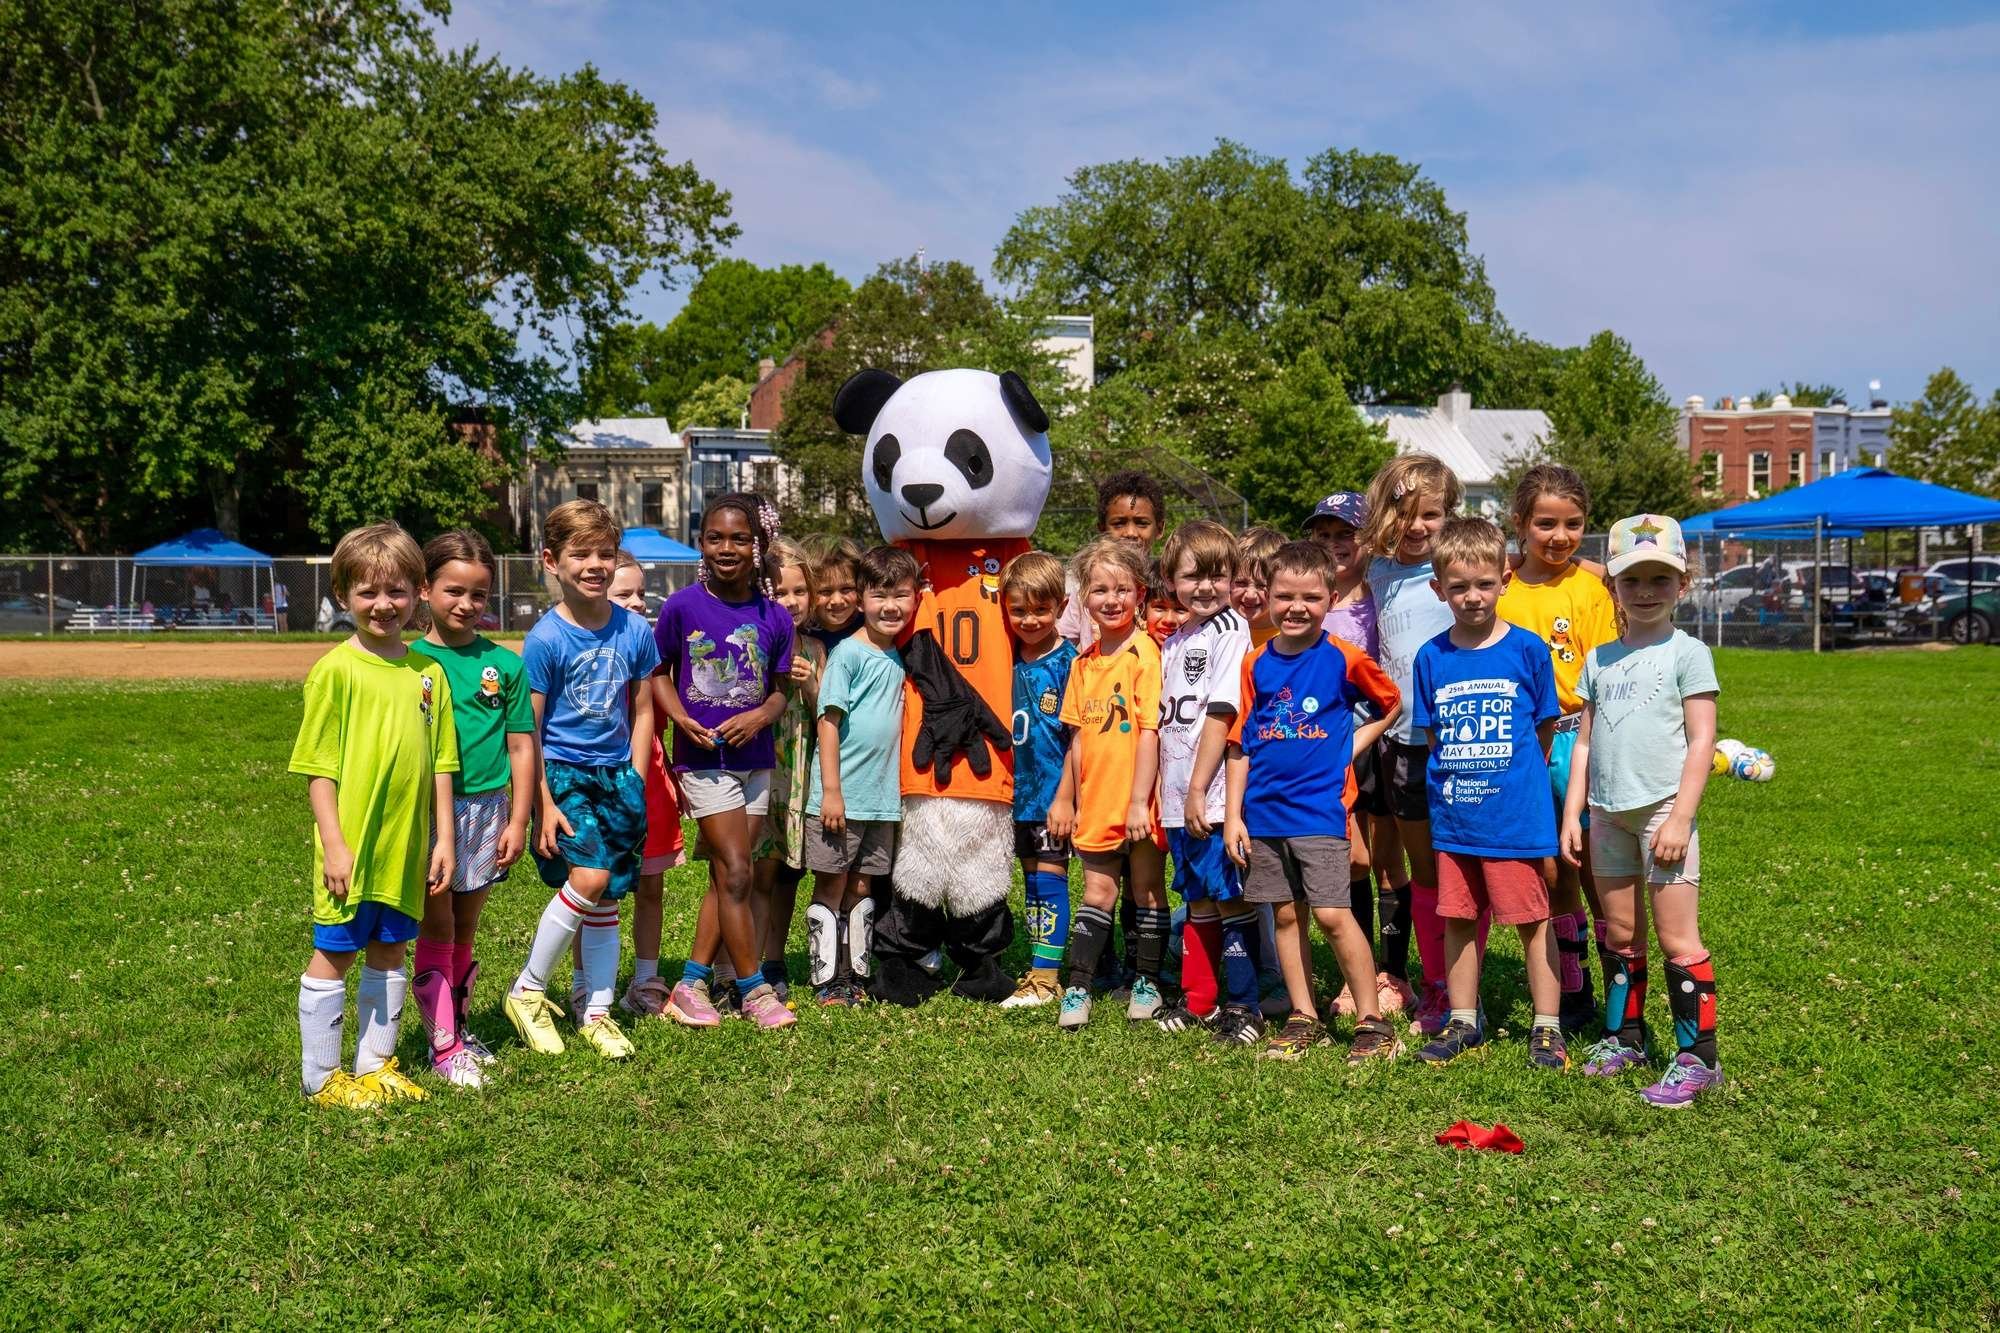 Dc-way-soccer-club-for-kids-in-washington-dc-summer-camp-at-tyler-elementary-school- 0214.jpg